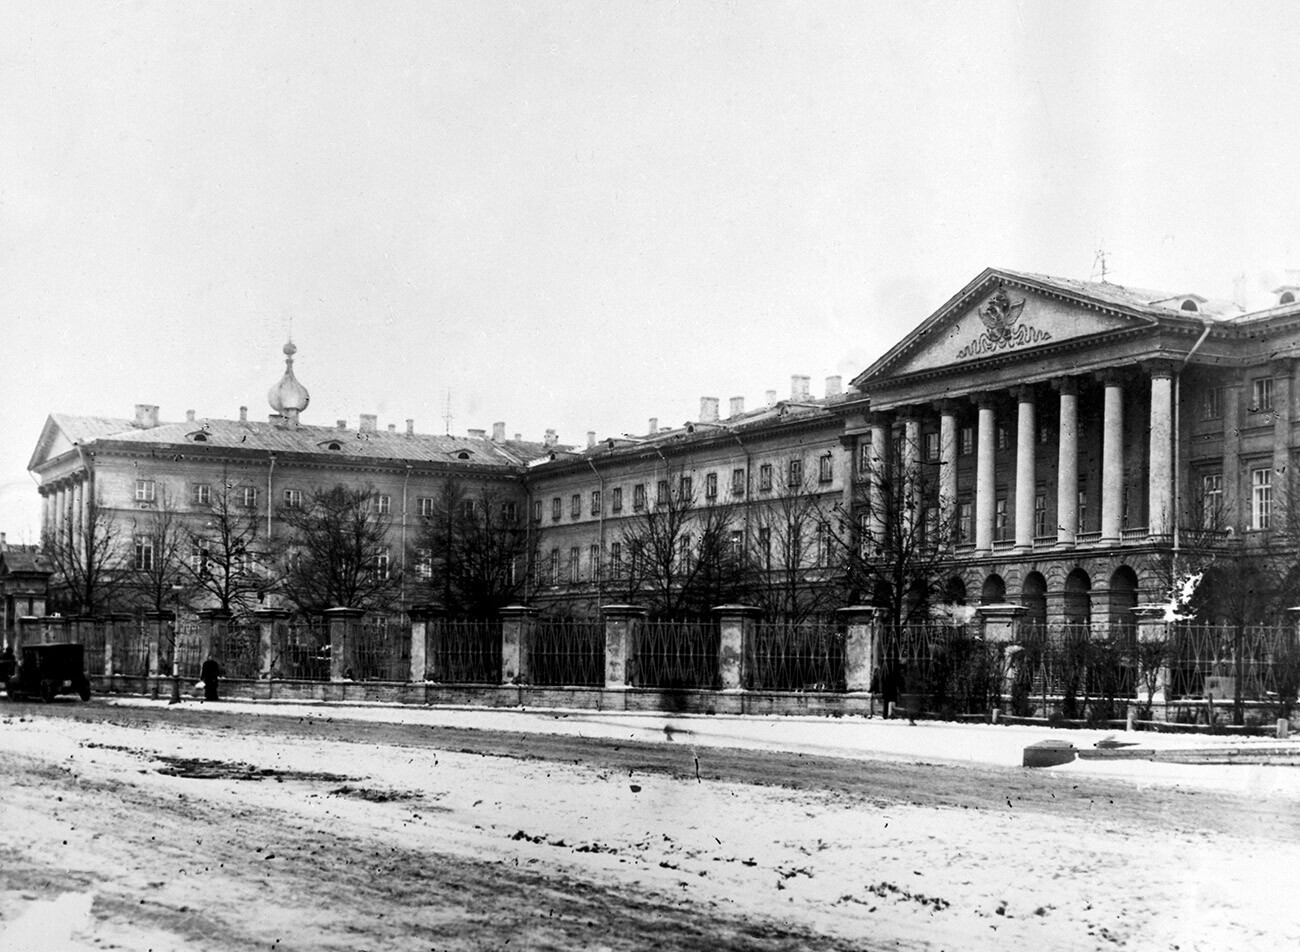 The Smolny Institute.